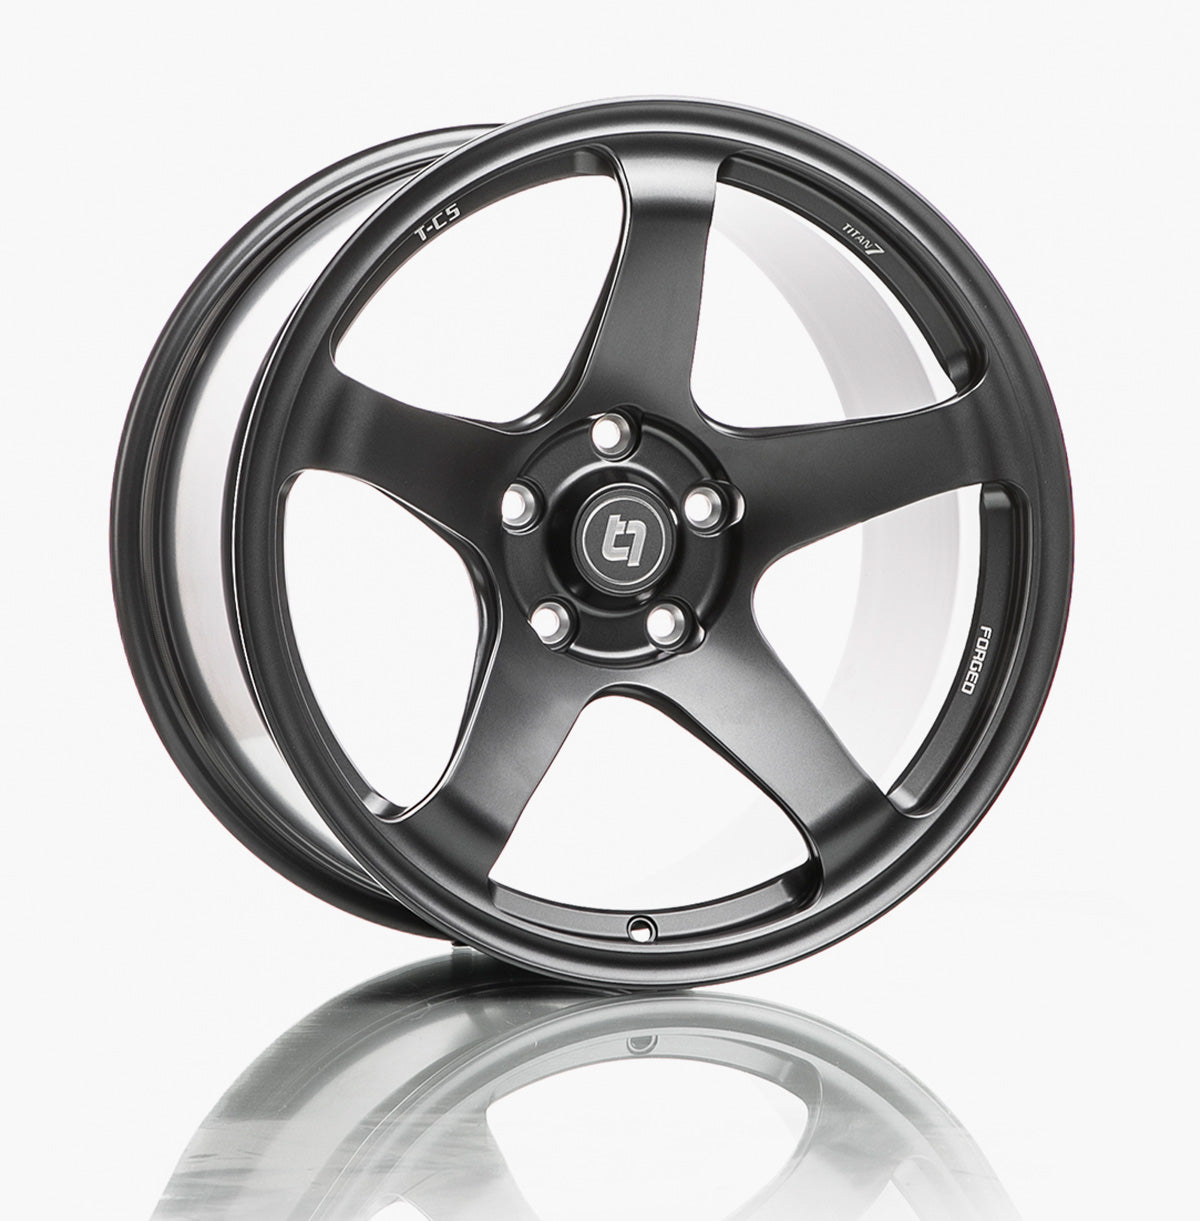 Titan7 T-C5 Forged 5 Spoke wheels for BMW E46/E9X M3 |18x10 +25 |Non Staggered| 5x120|